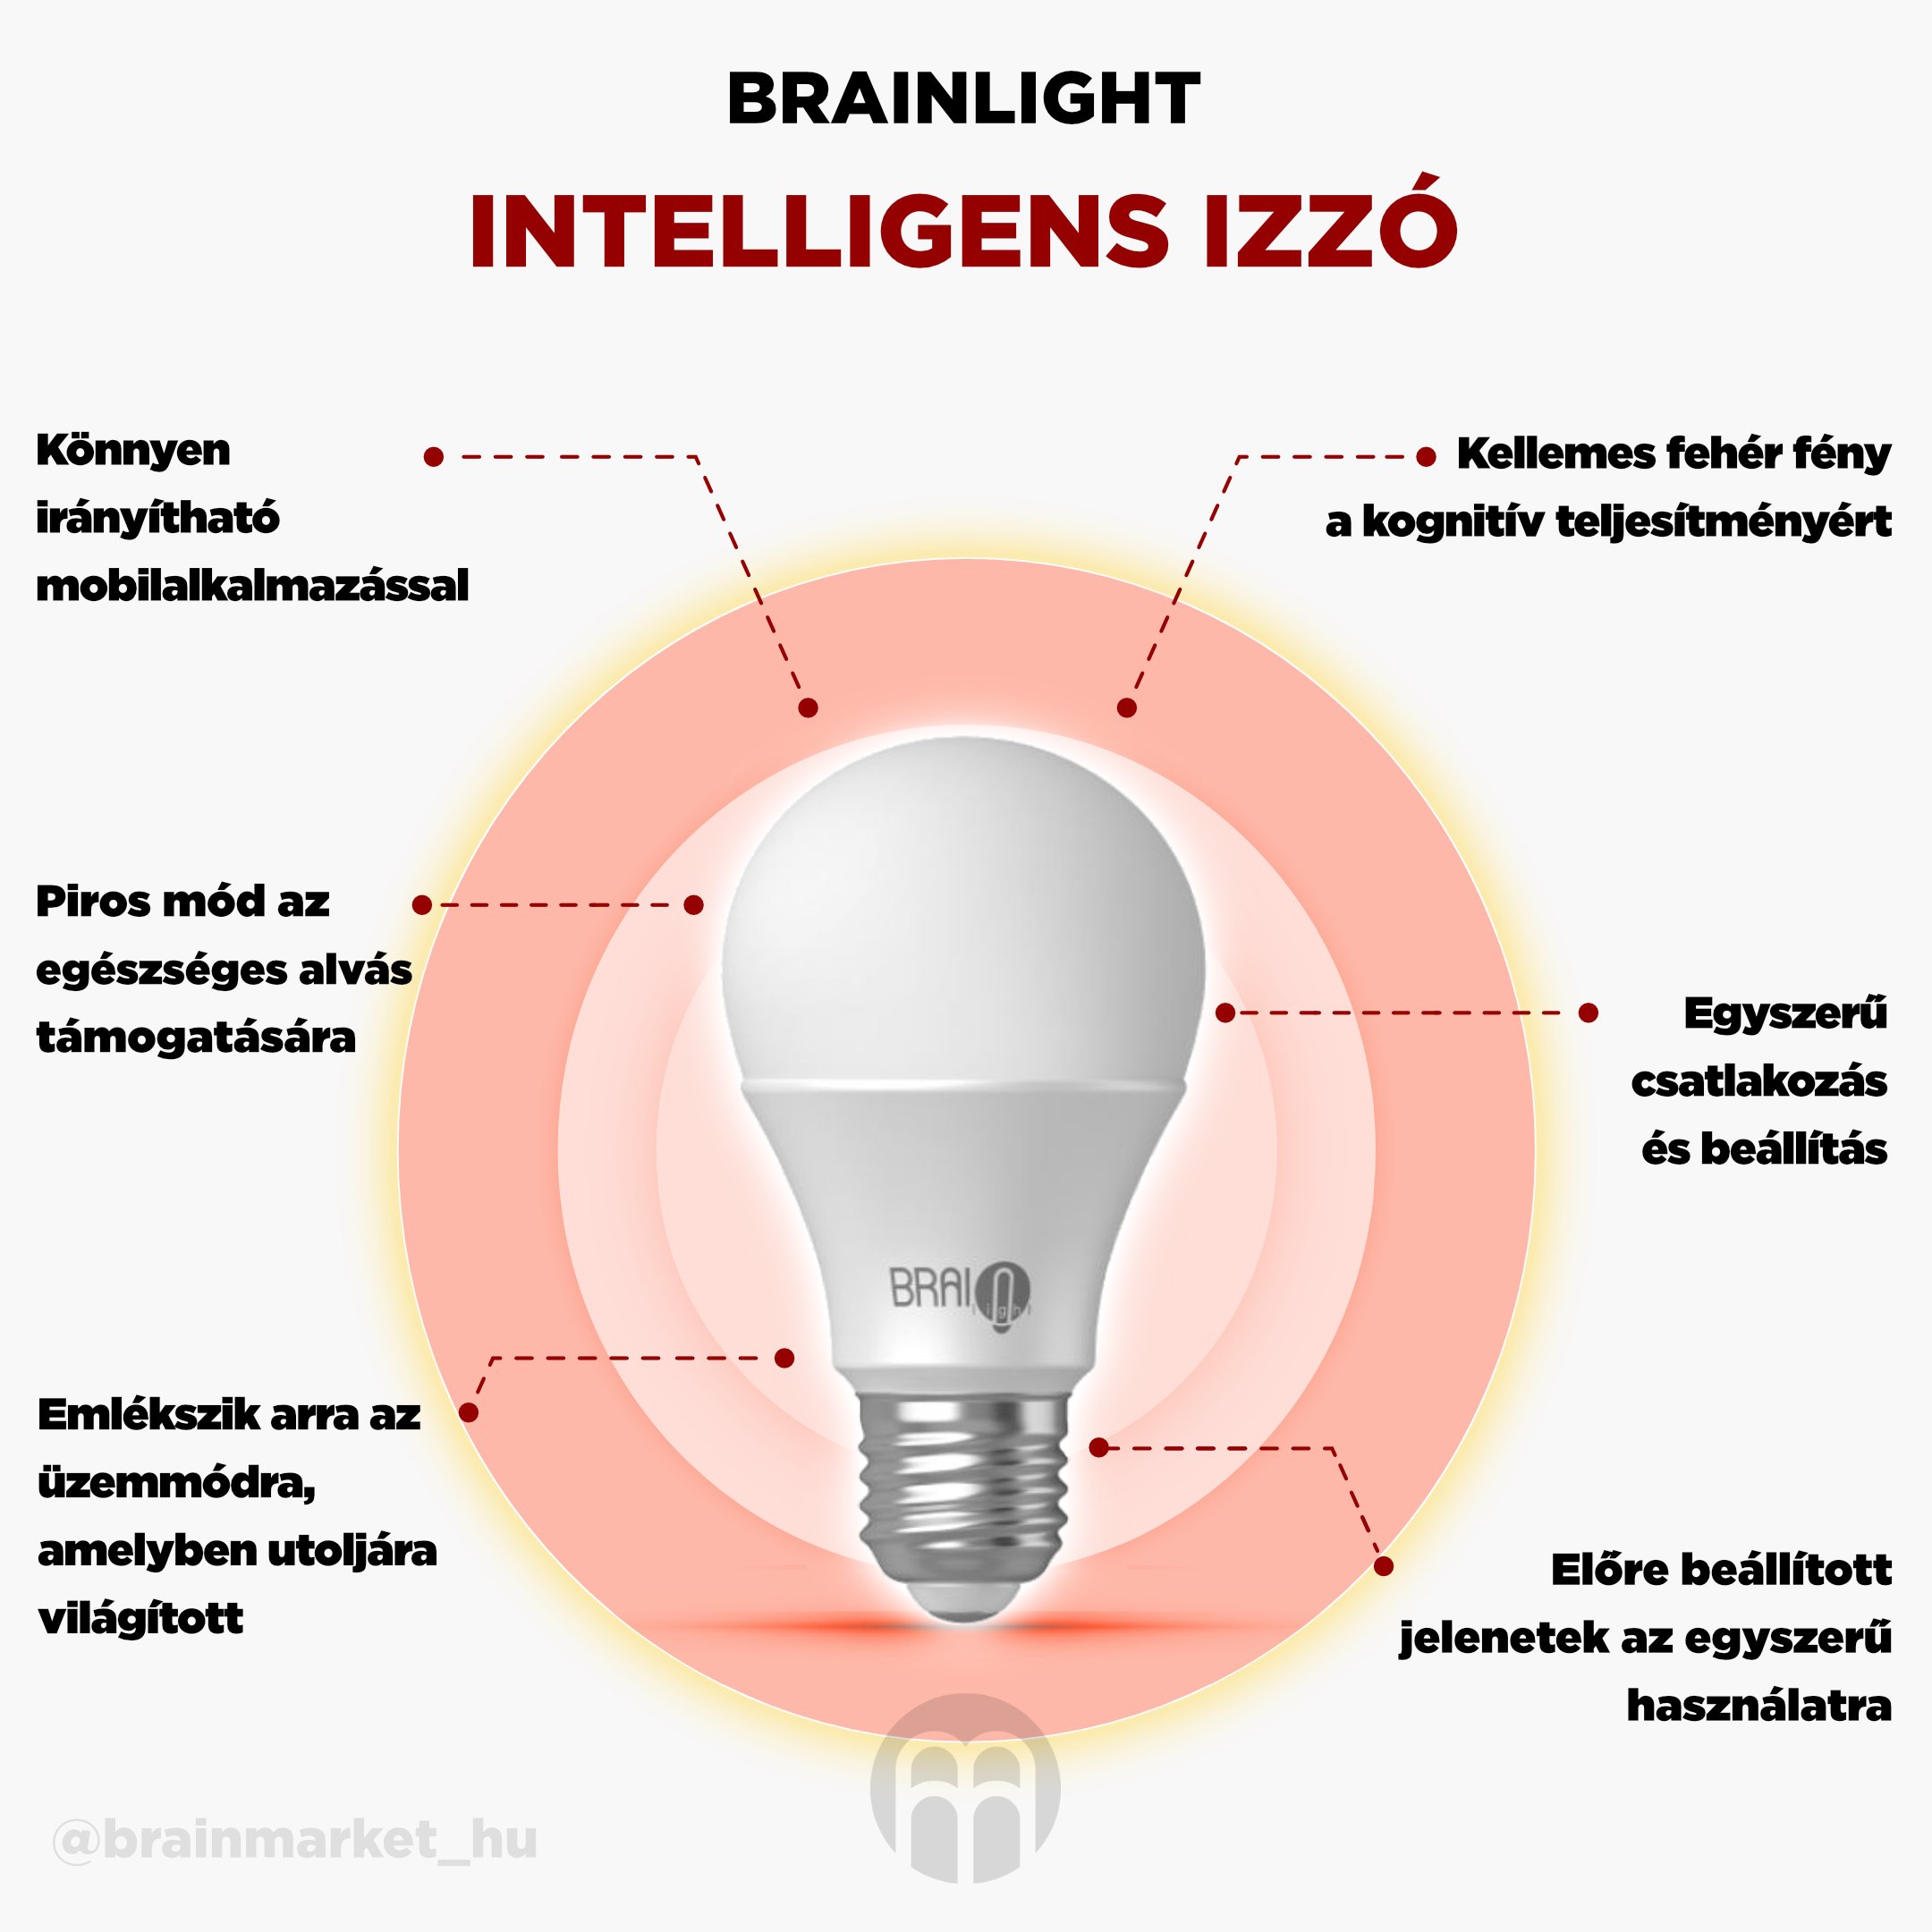 BrainLIGHT intelligens izzó_infographic_5_cz